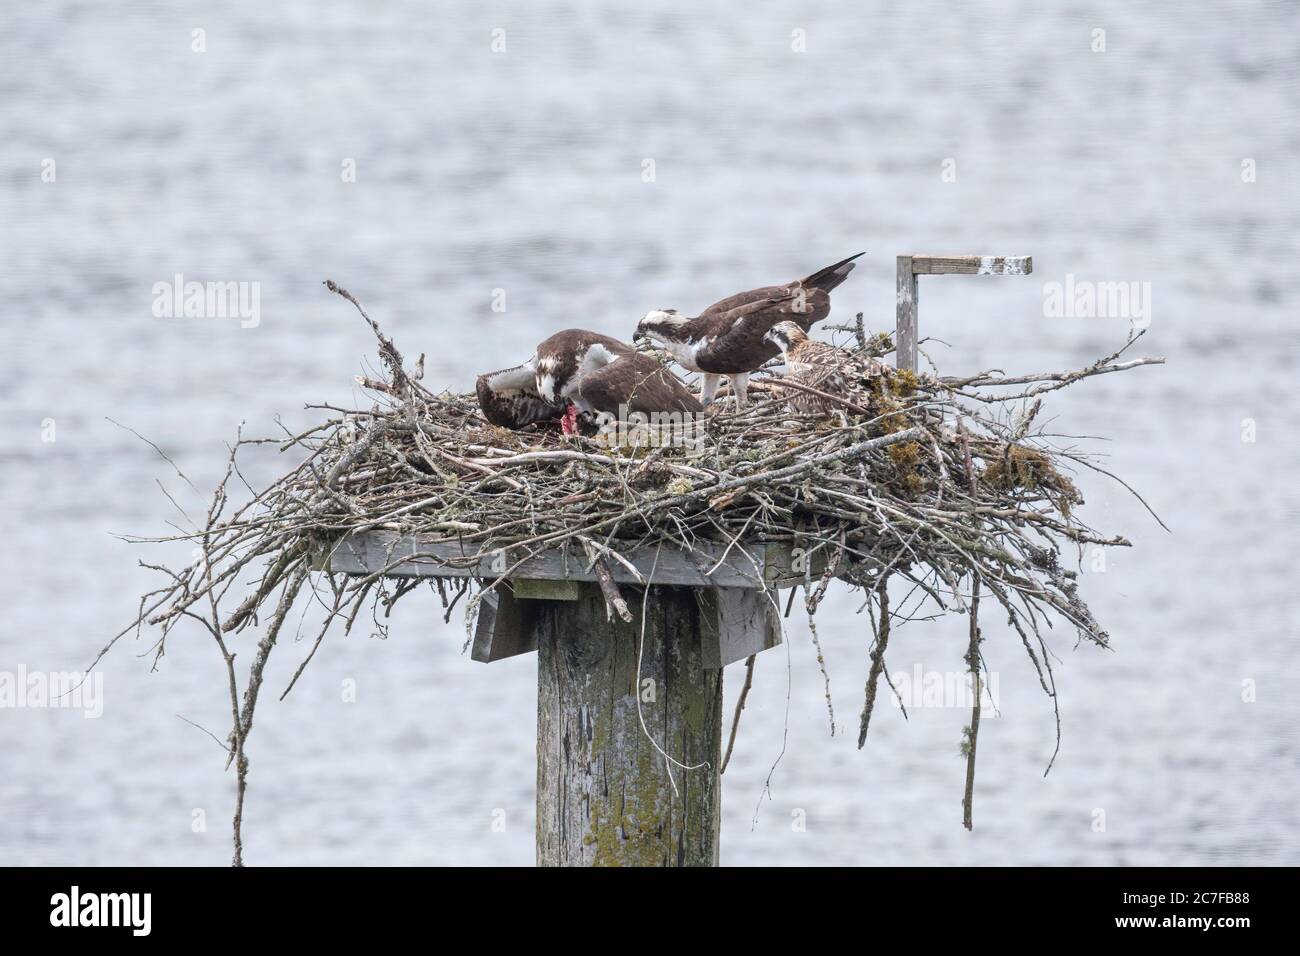 Osprey nest at Pitt Meadows BC Canada Stock Photo